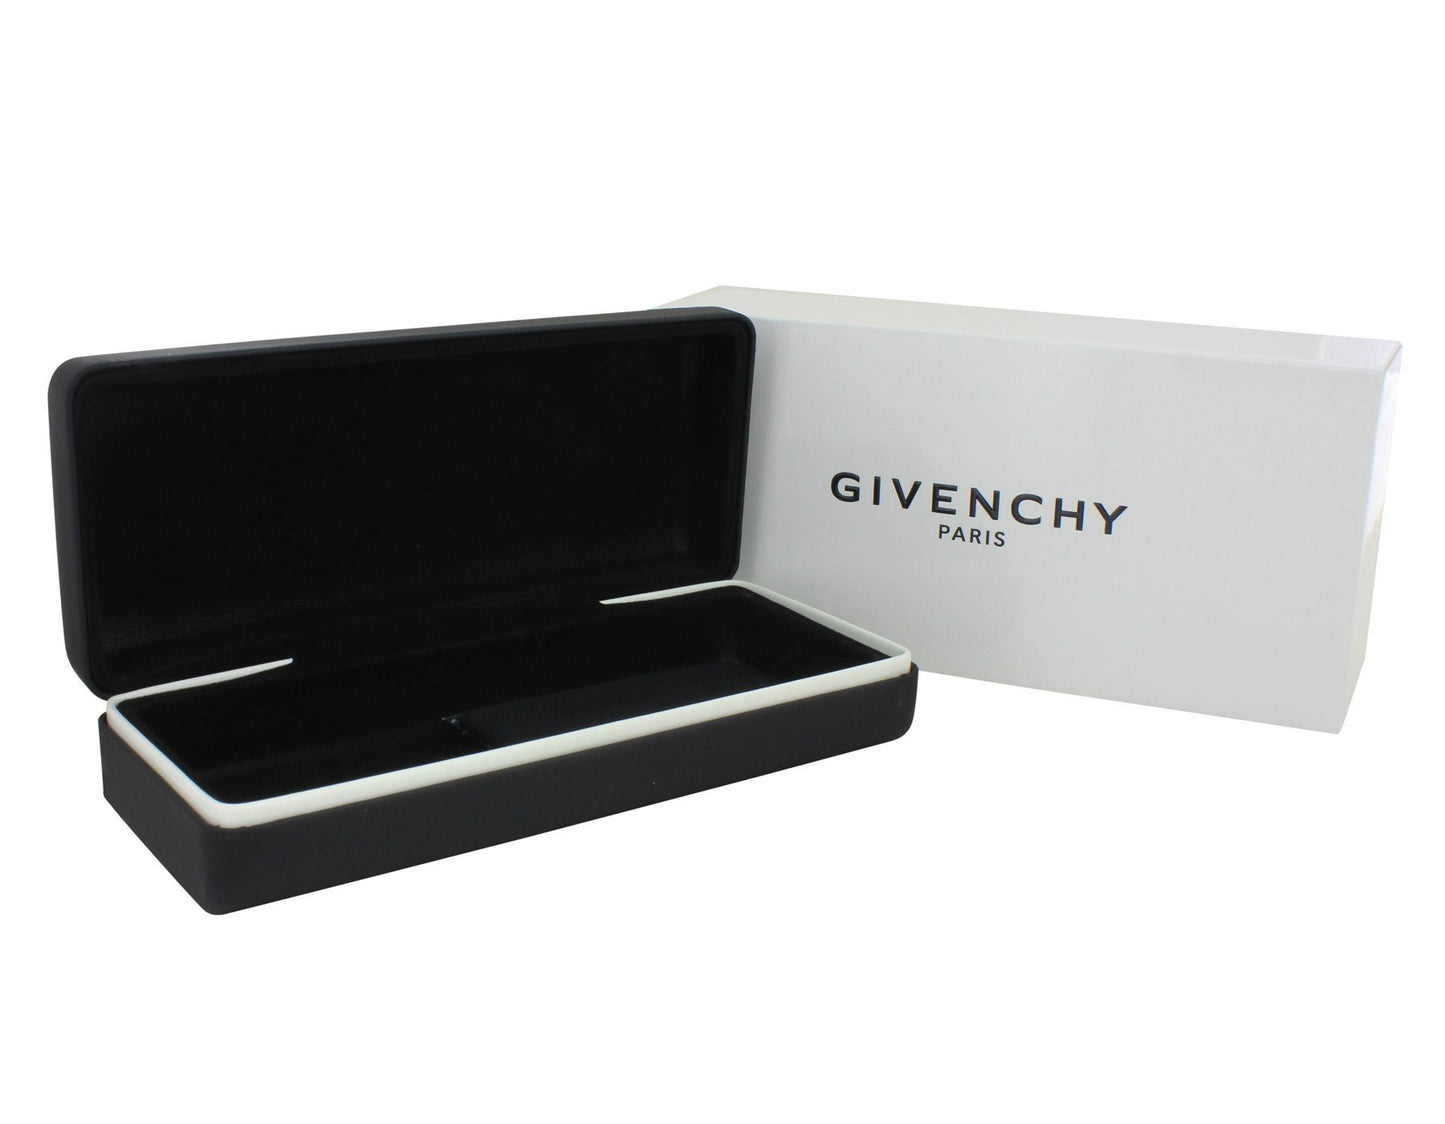 Givenchy GV7155GS-0KB7EZ-53 53mm New Sunglasses